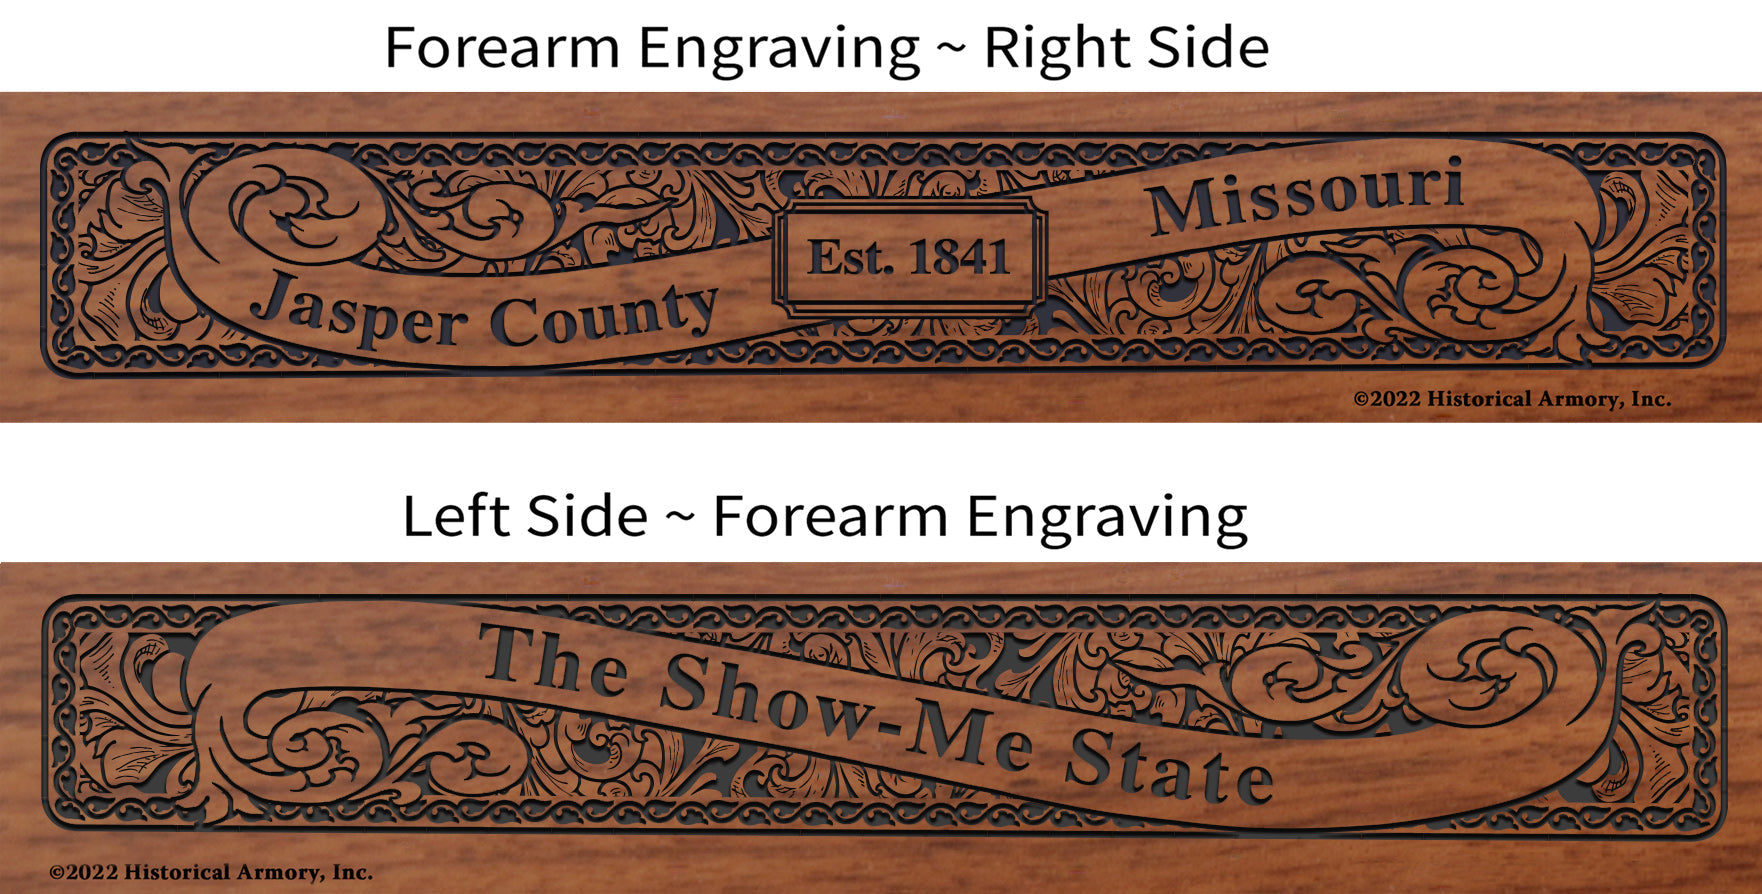 Jasper County Missouri Engraved Rifle Forearm